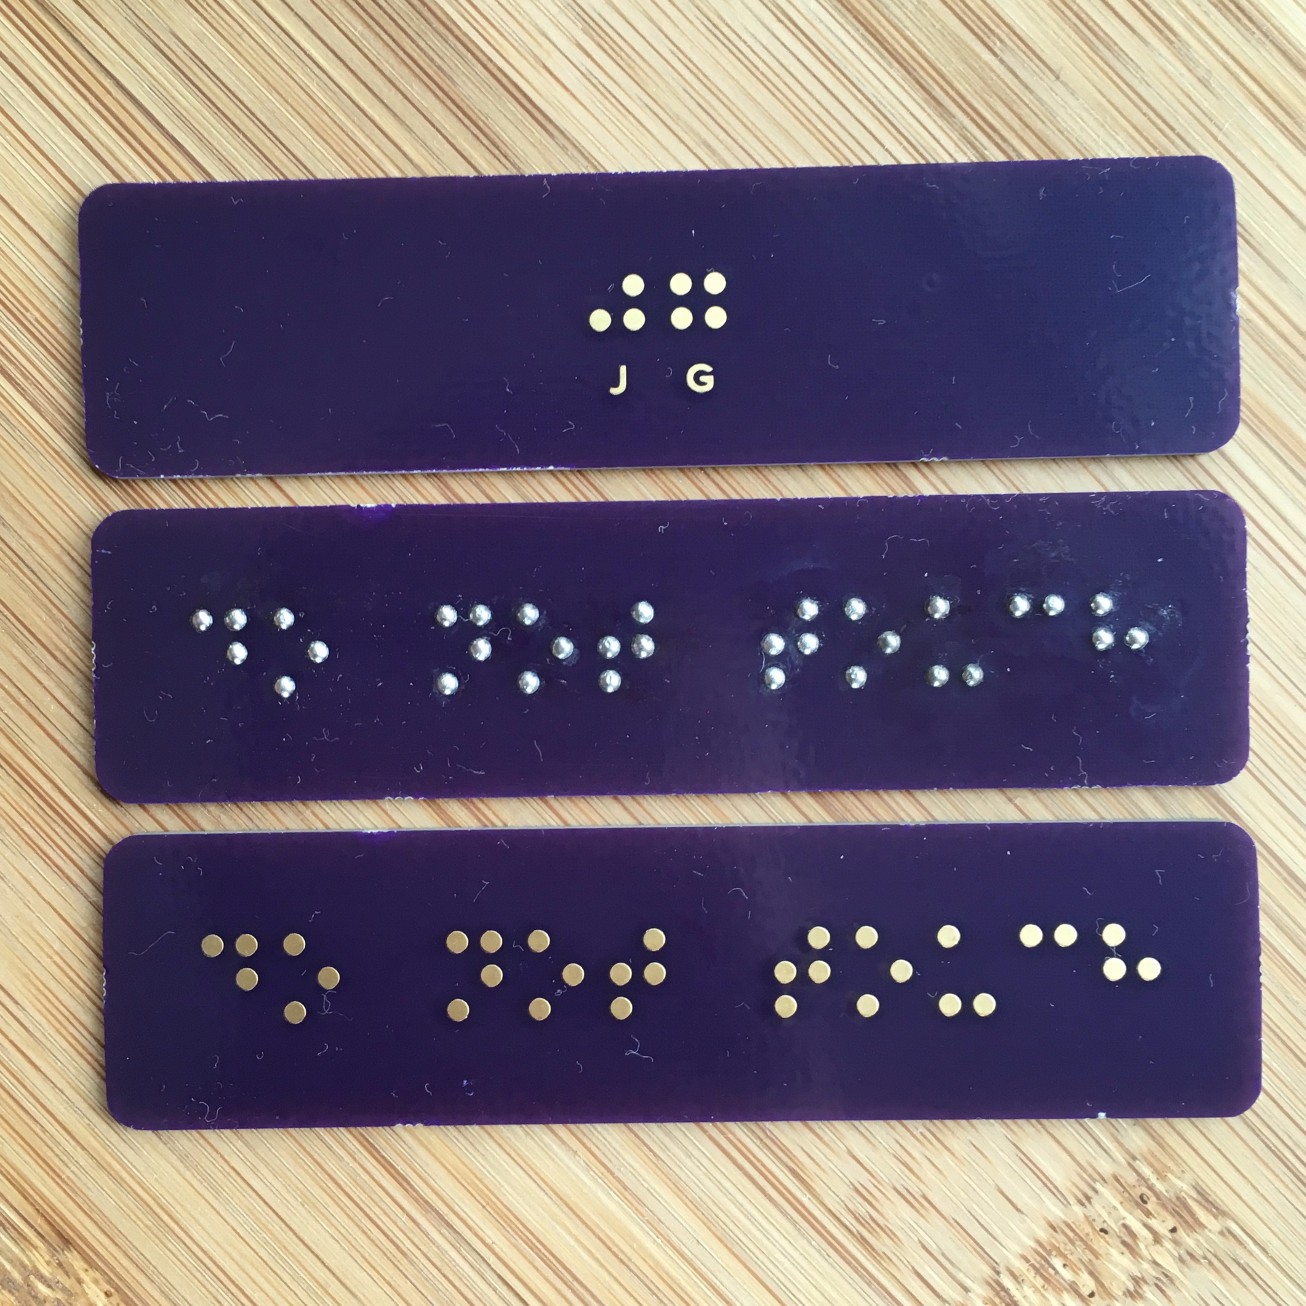 Purple Braille signage!